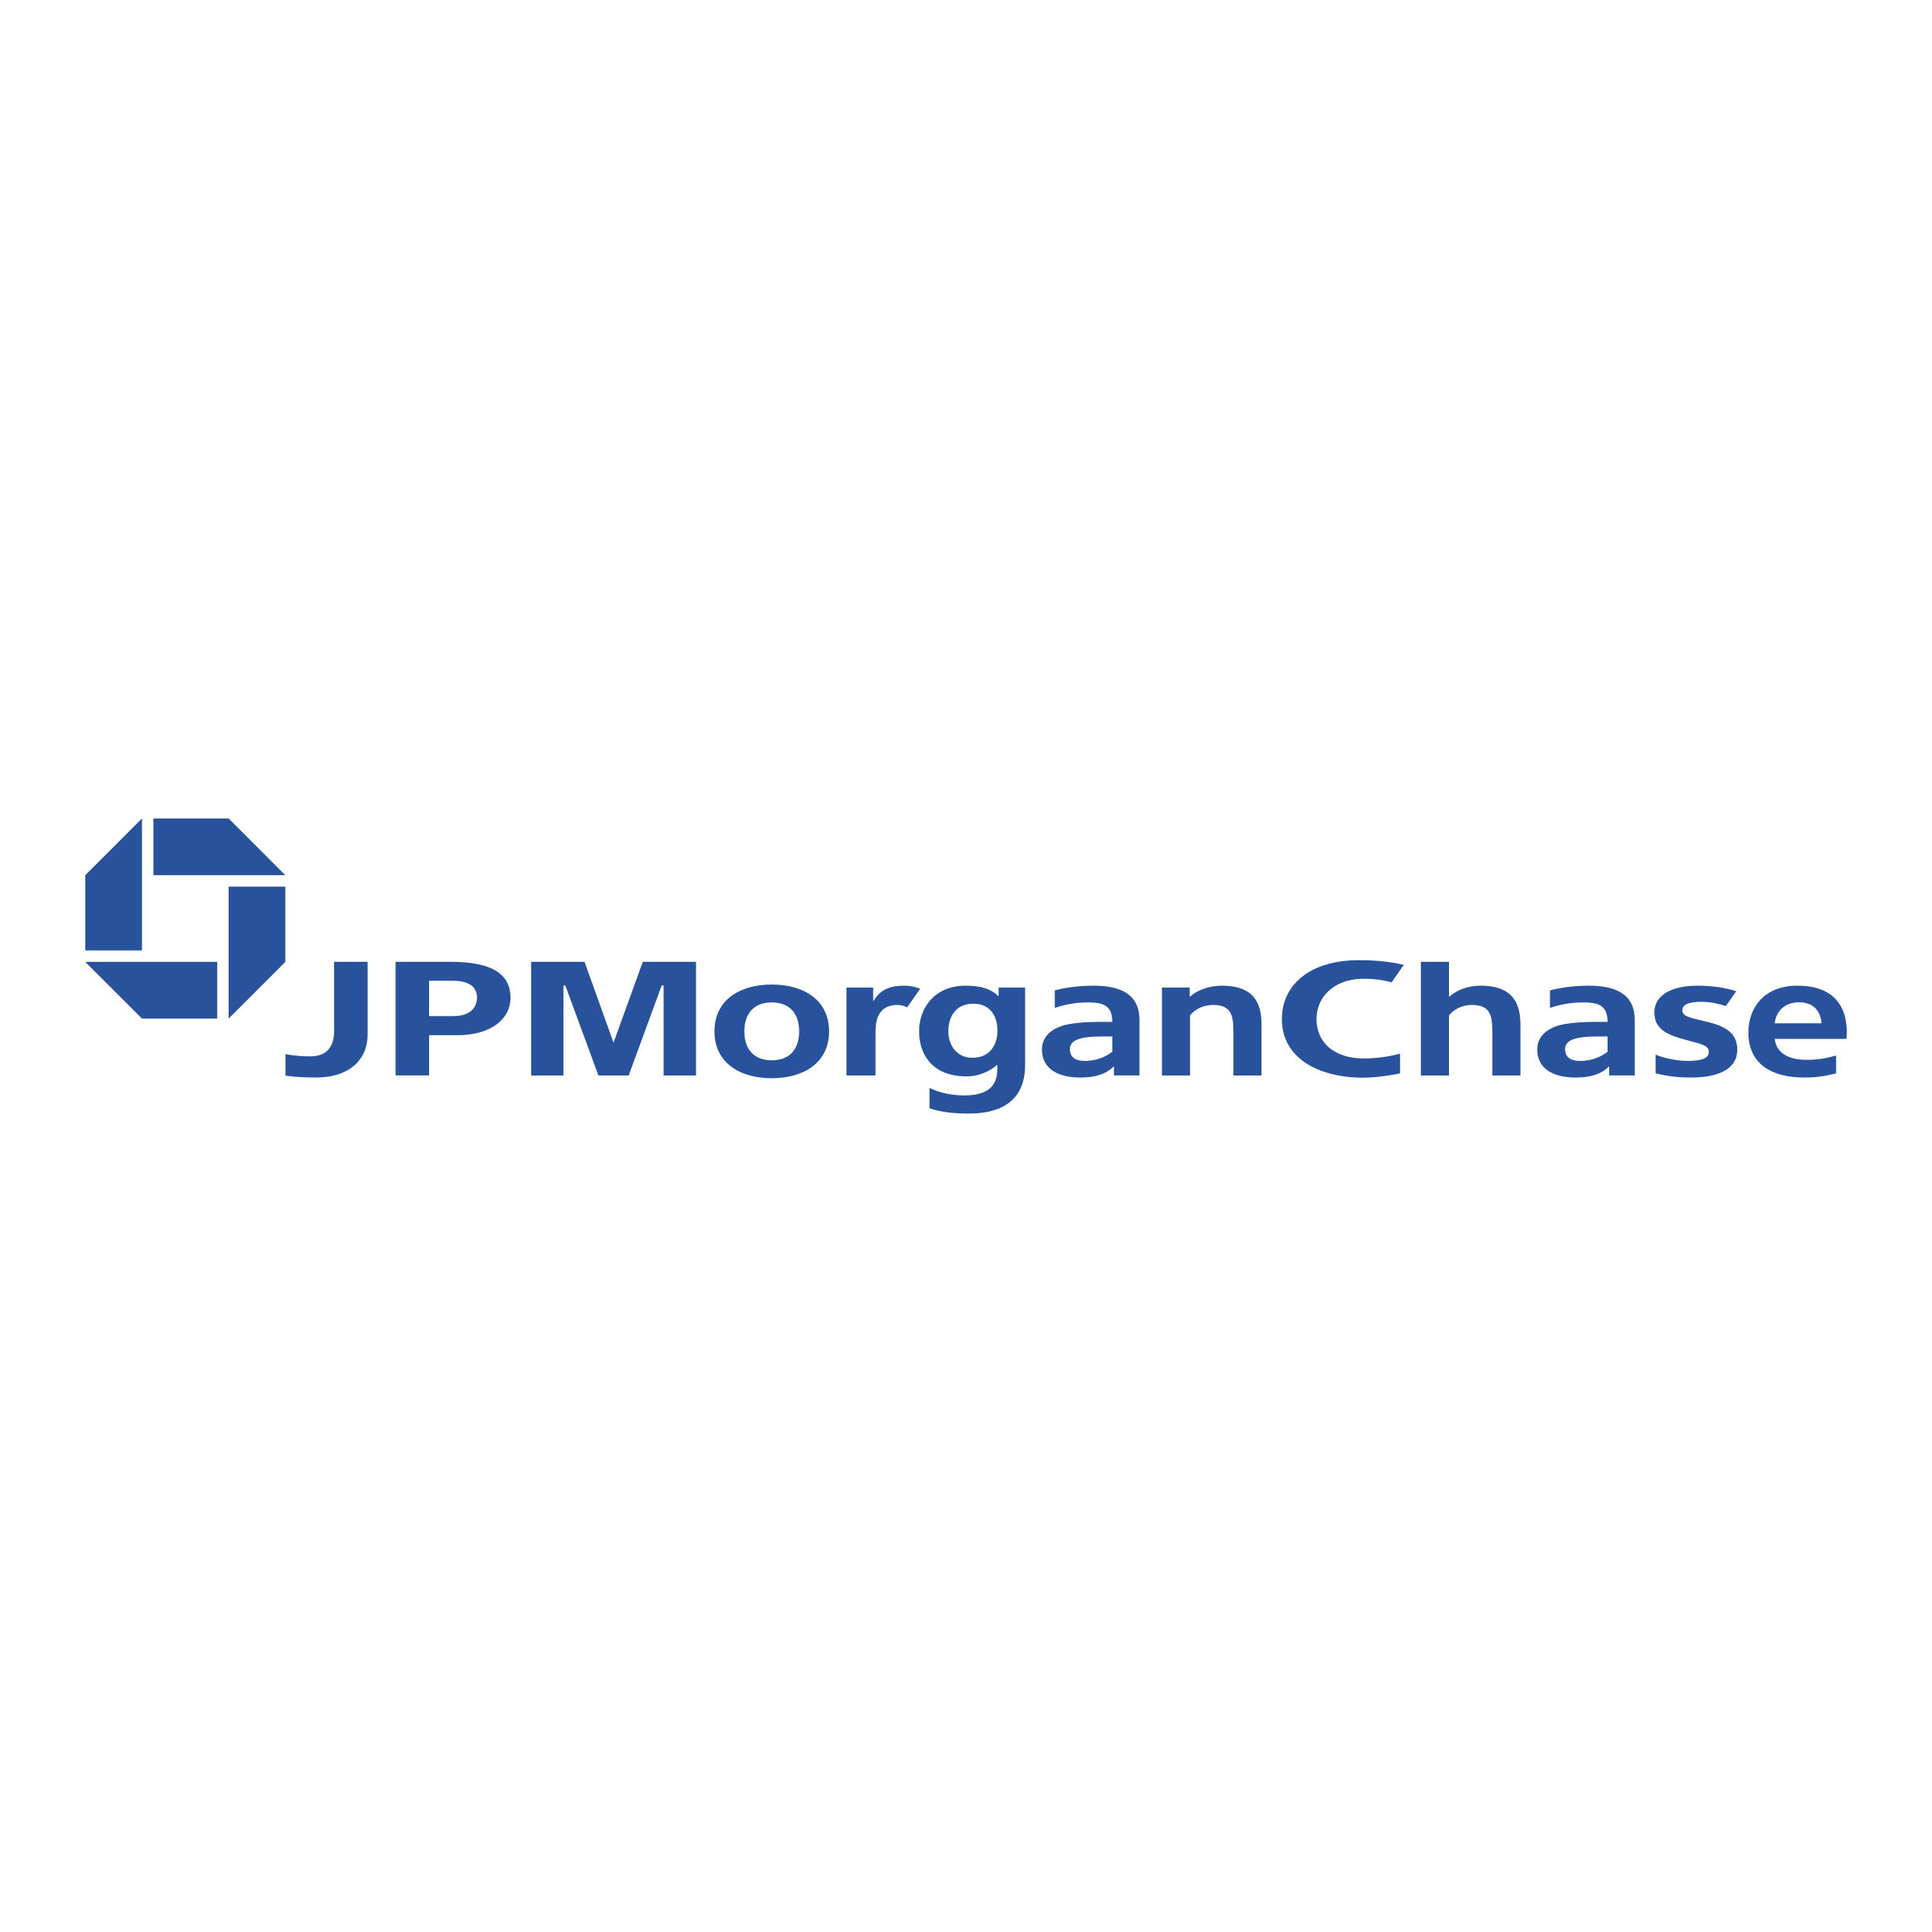 JPMorgan Chase Logo Imágenes Transparentes